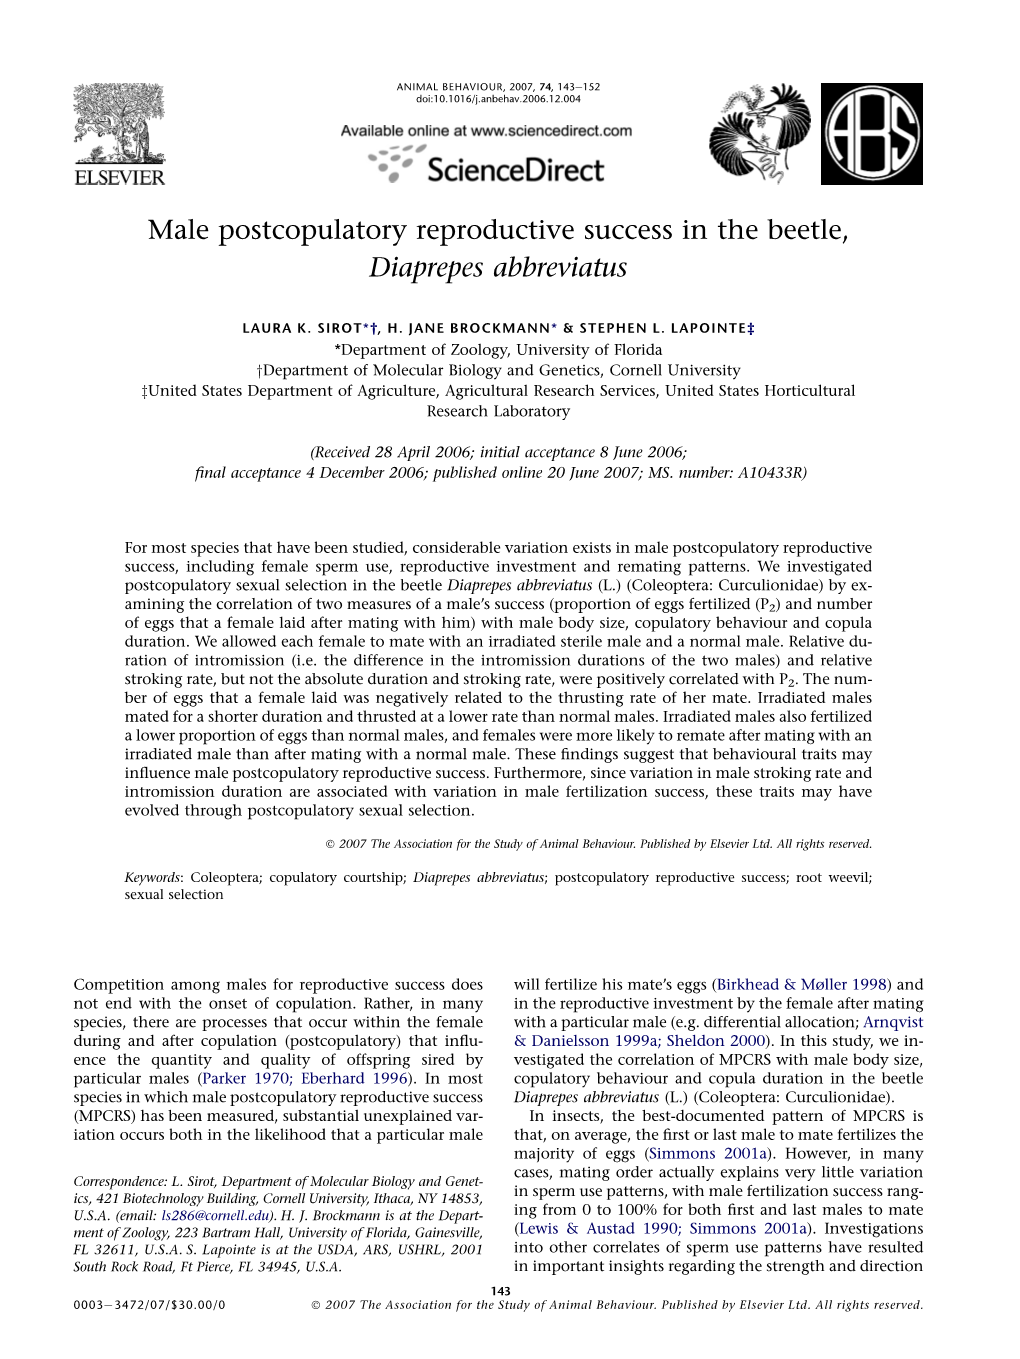 Male Postcopulatory Reproductive Success in the Beetle, Diaprepes Abbreviatus